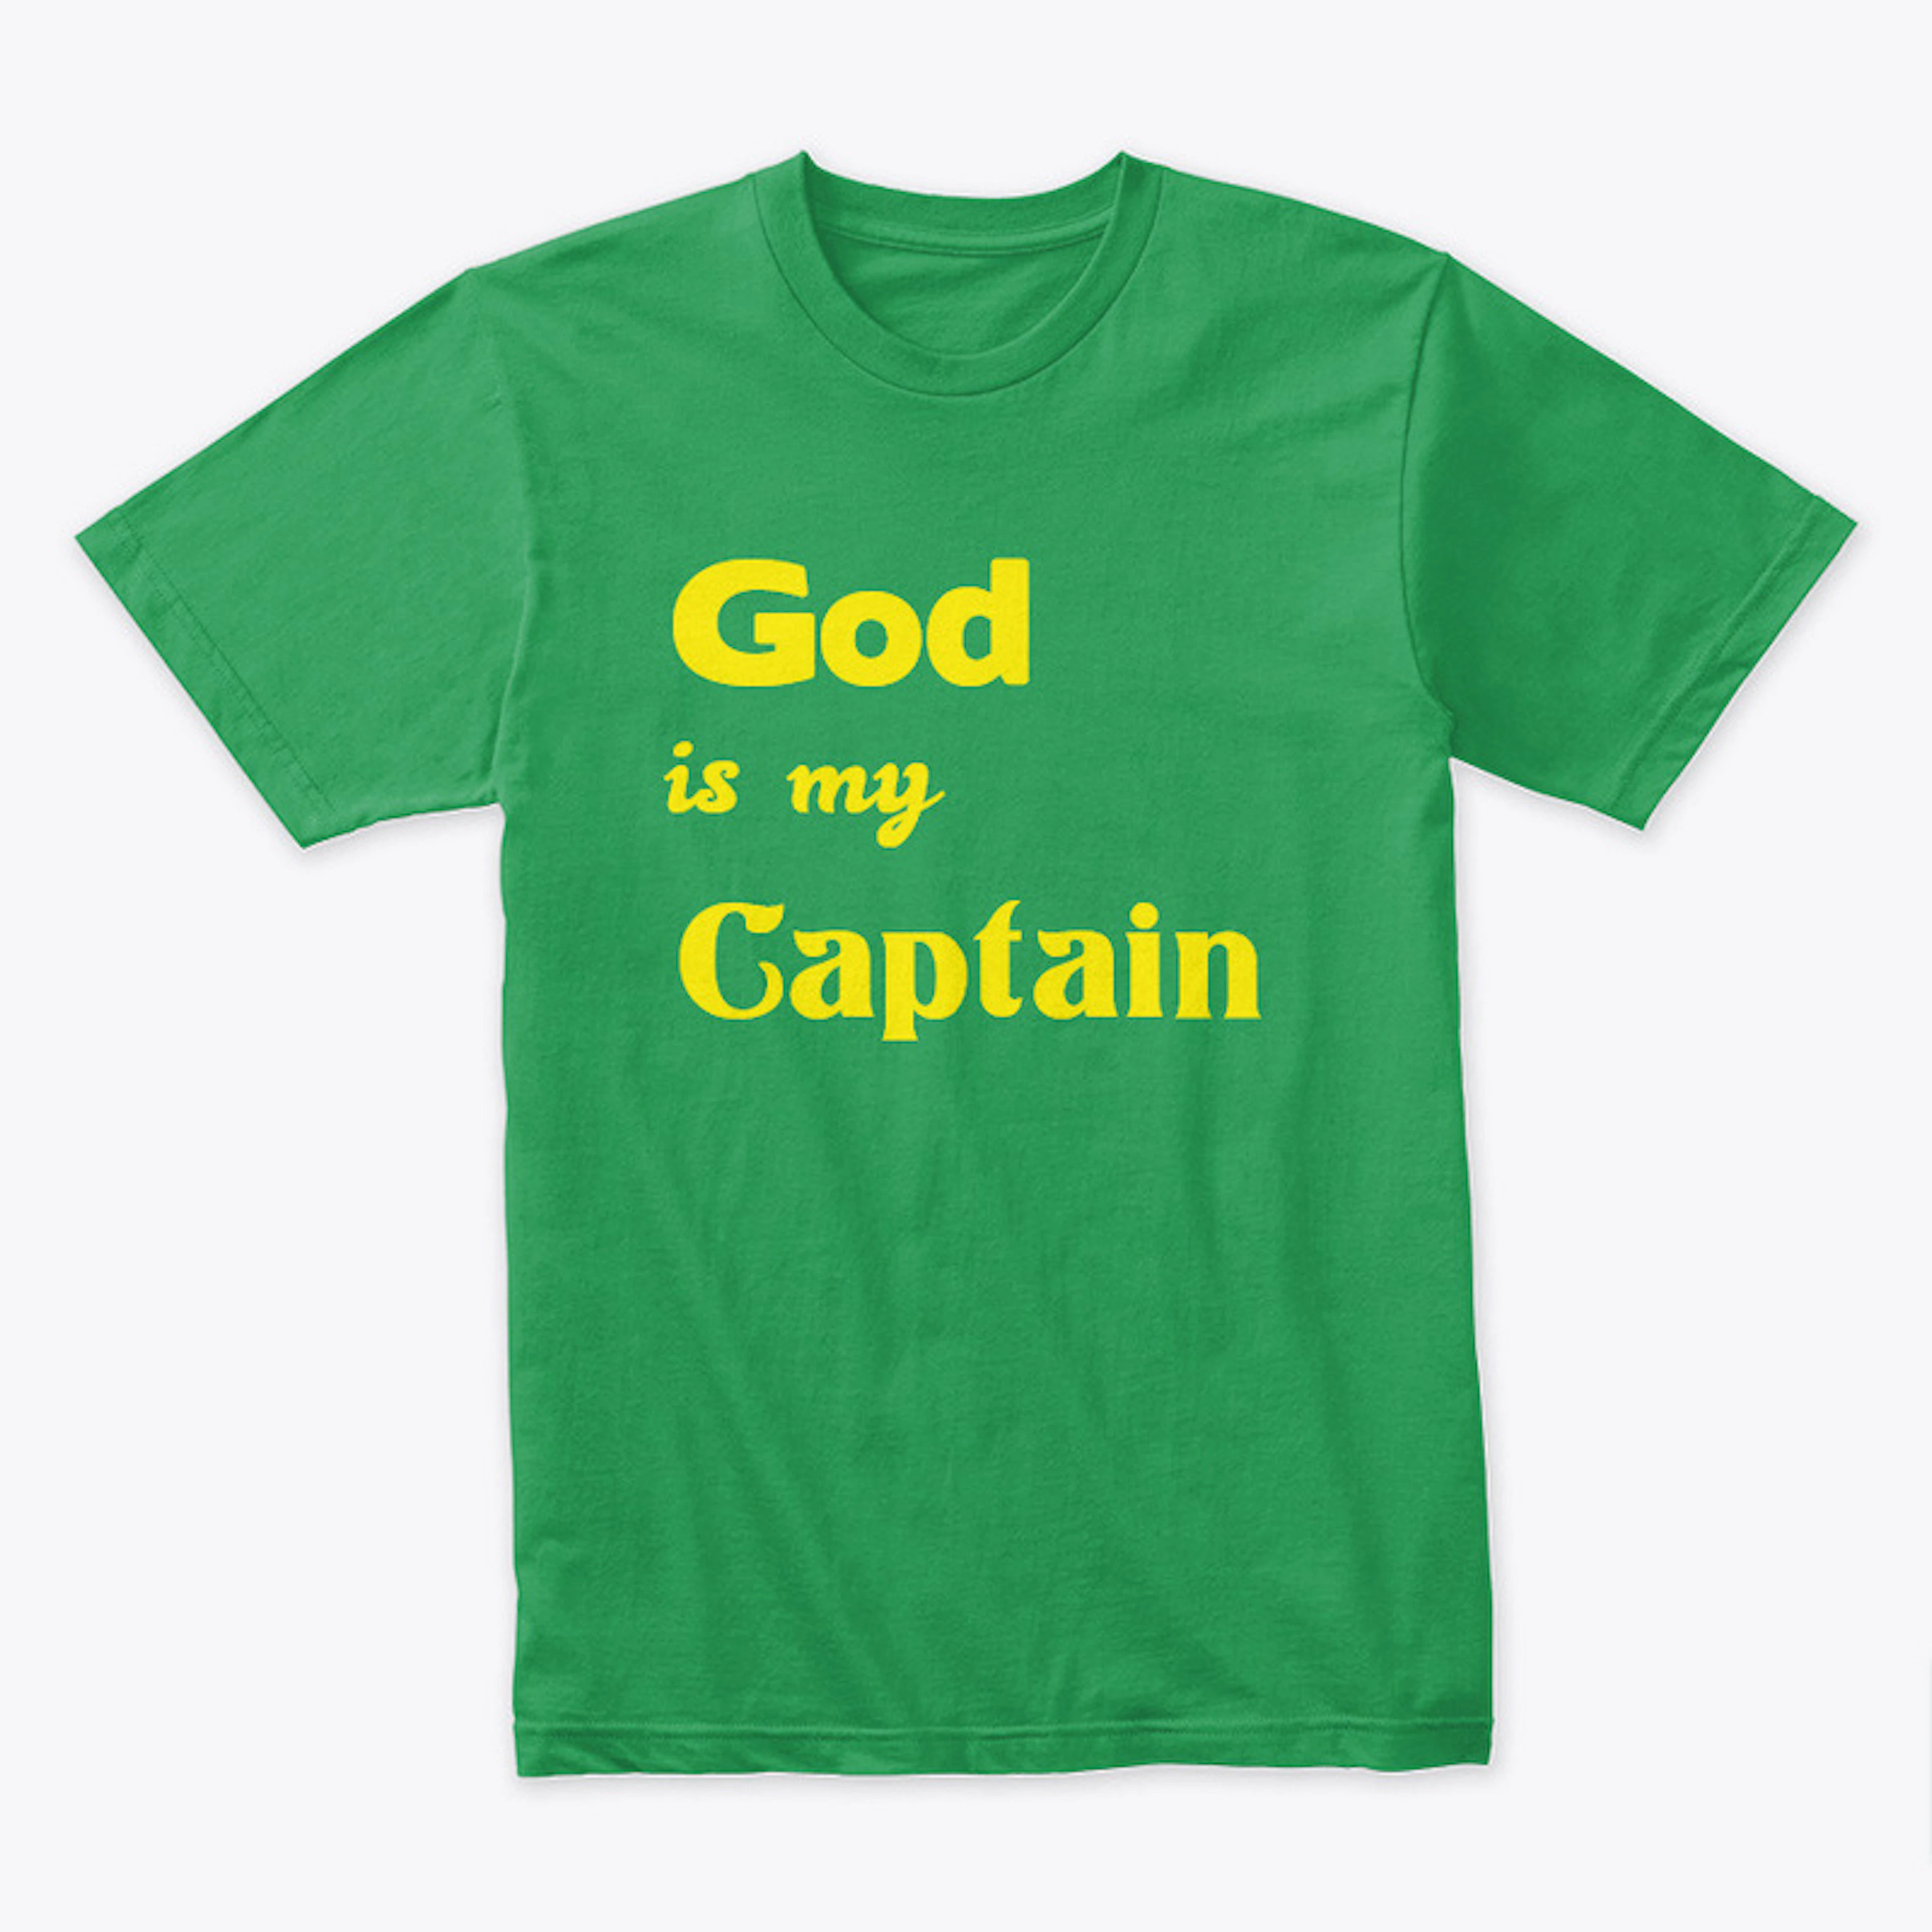 God is my Captain